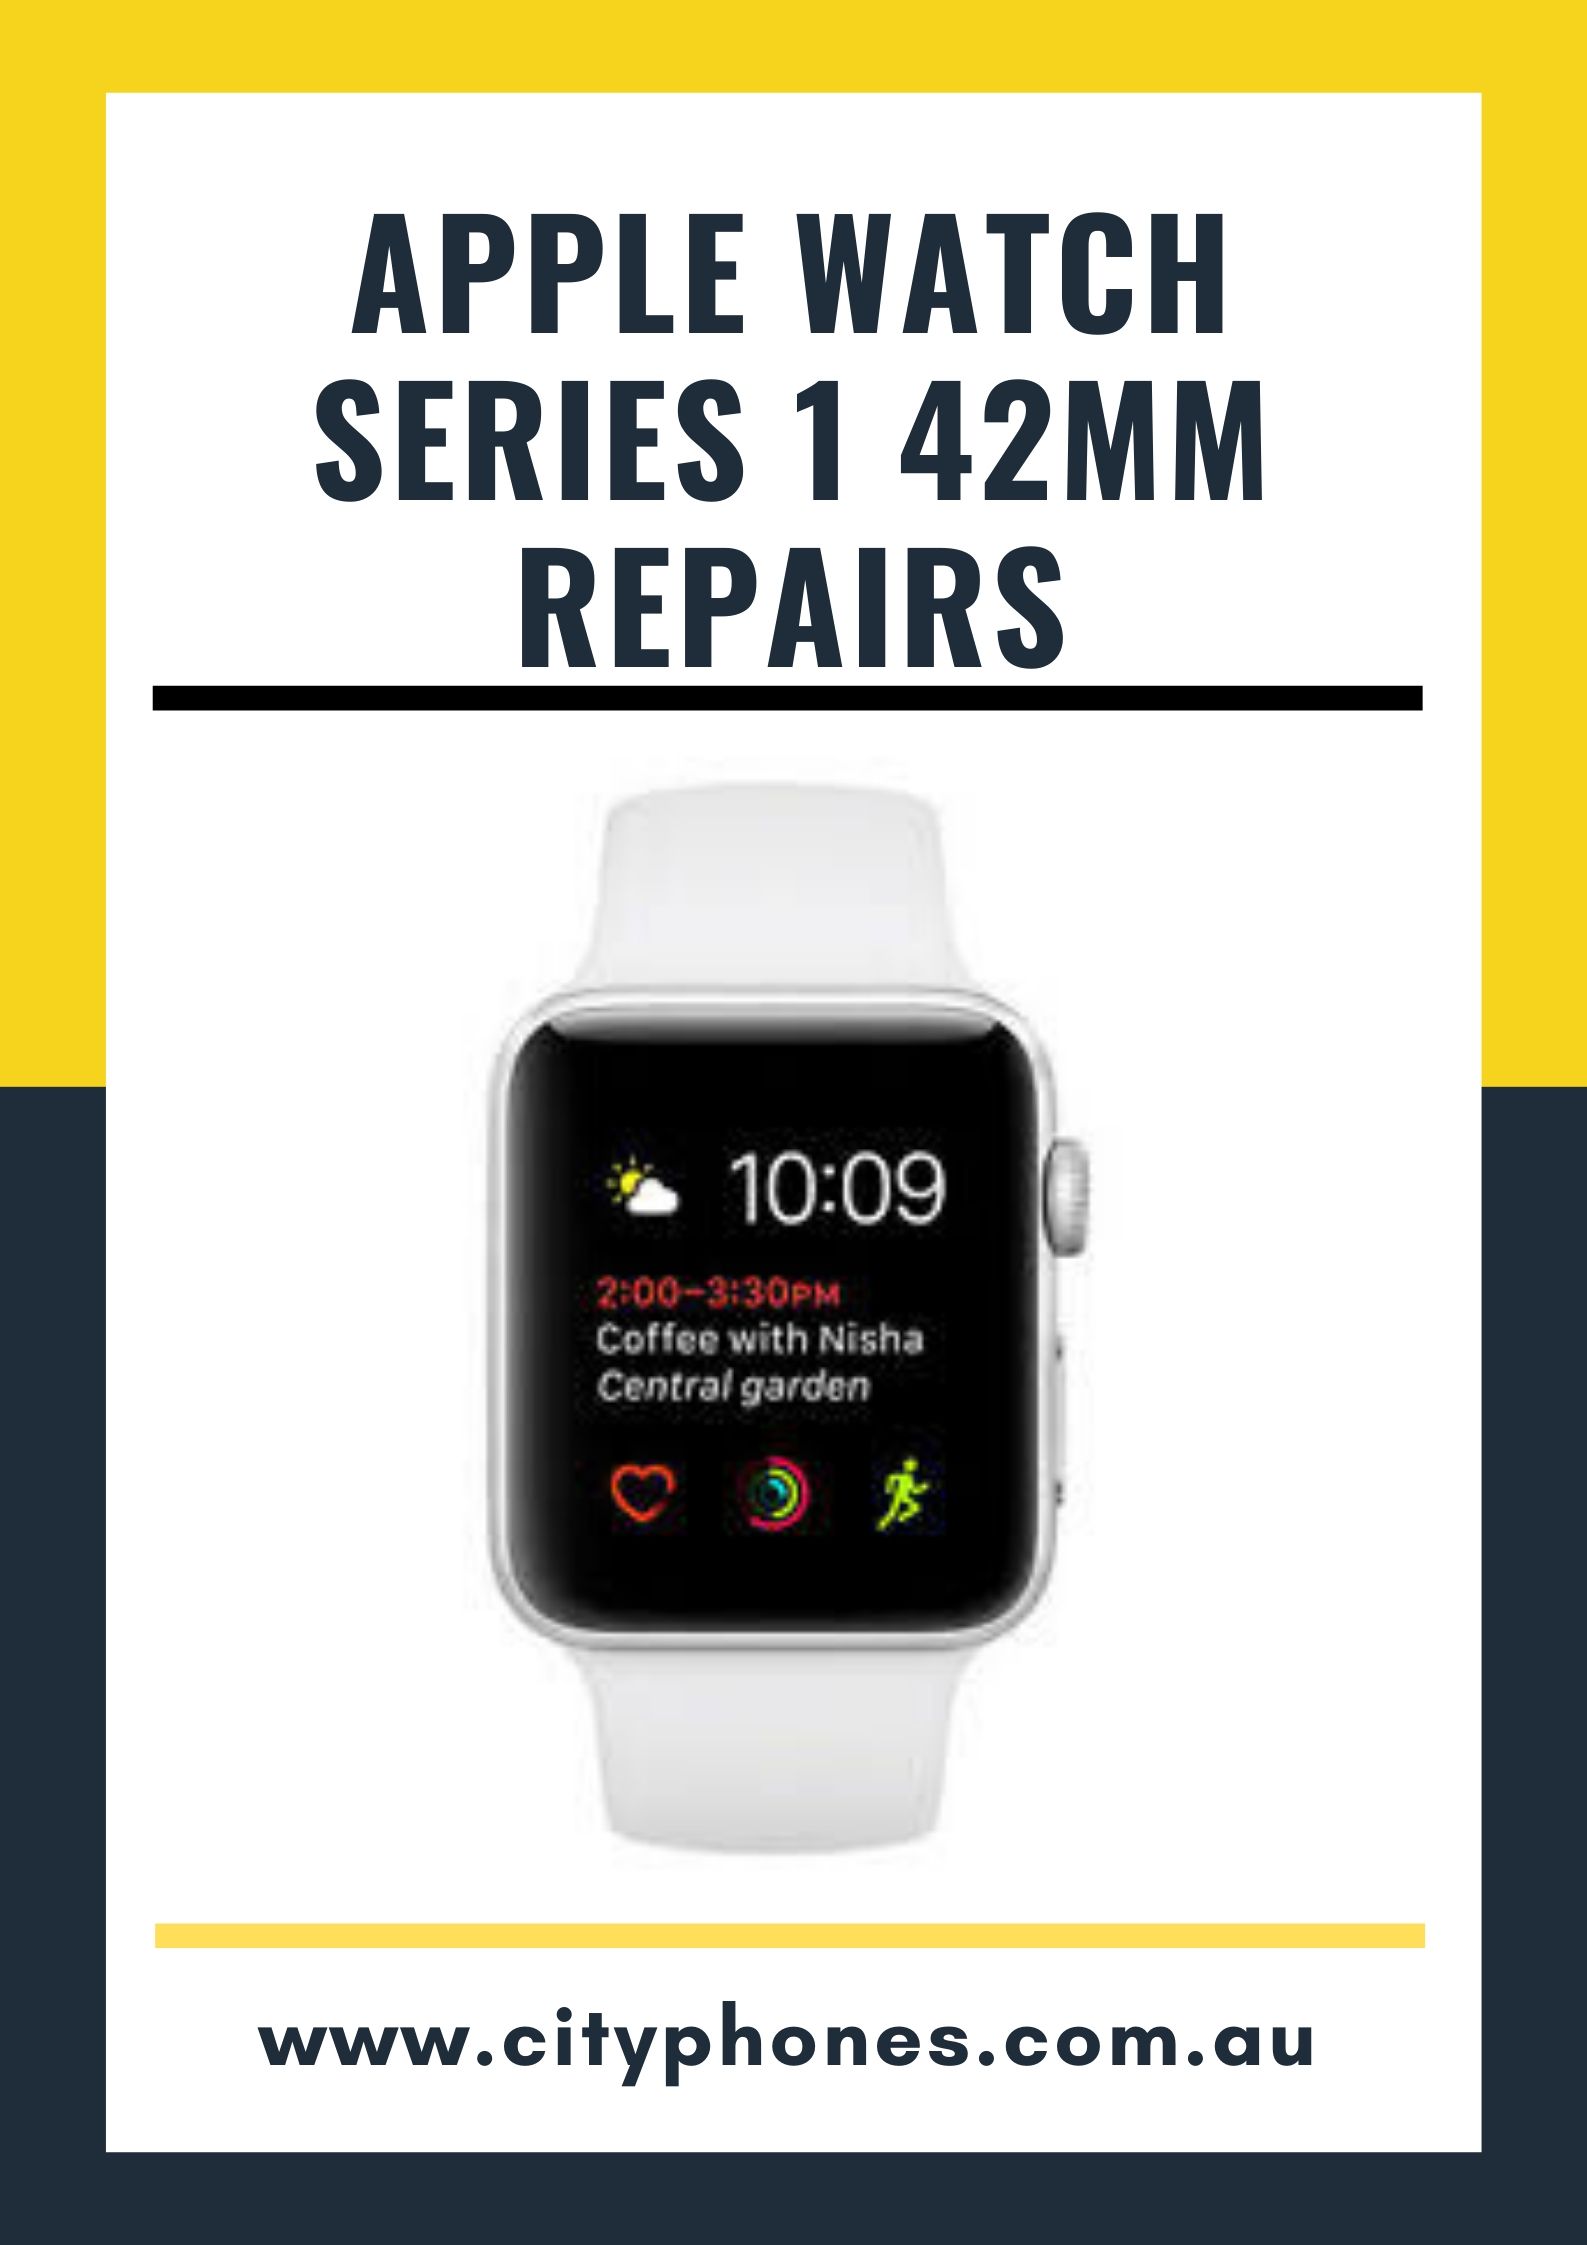 broken apple watch repair